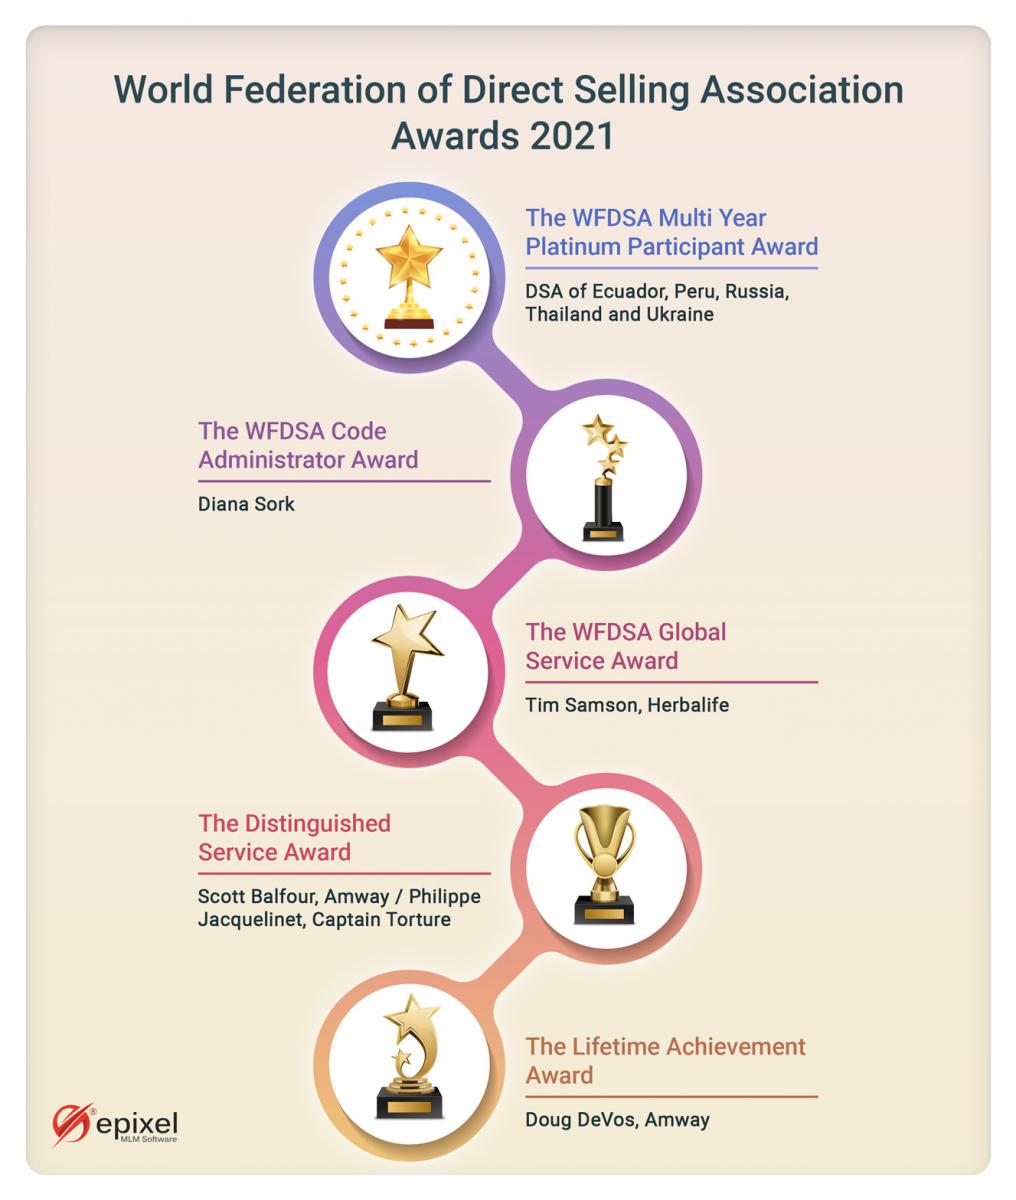 The WFDSA awards 2021